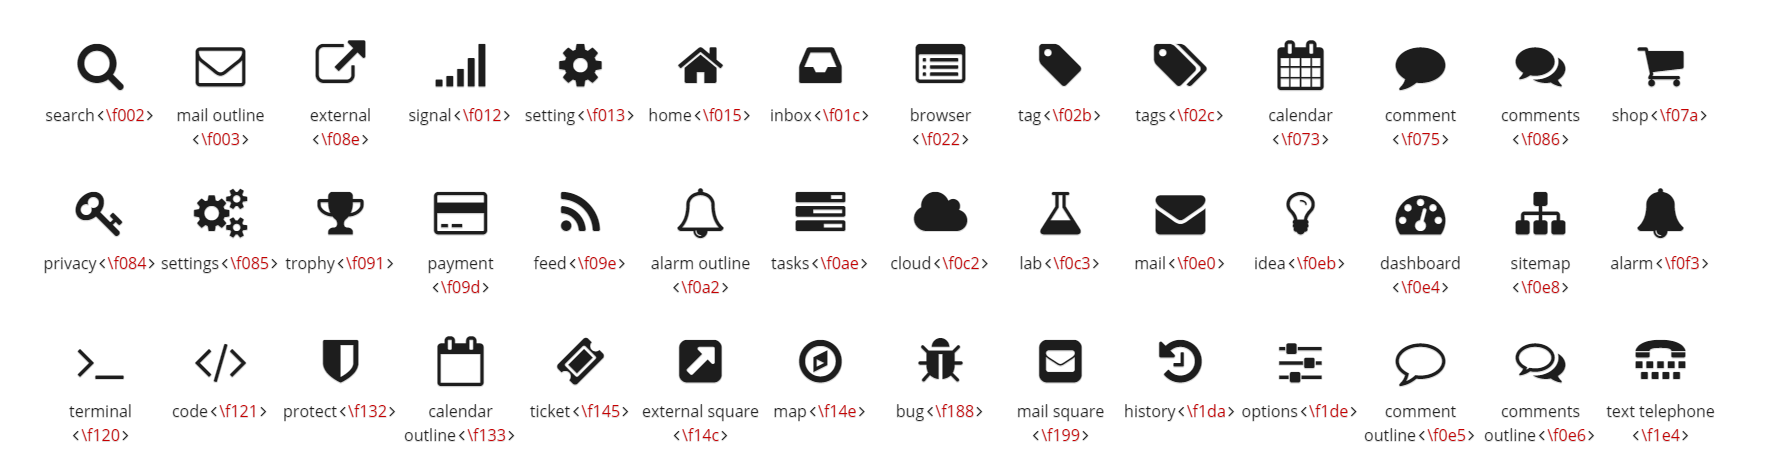 Semantic UI Icons Icon Set